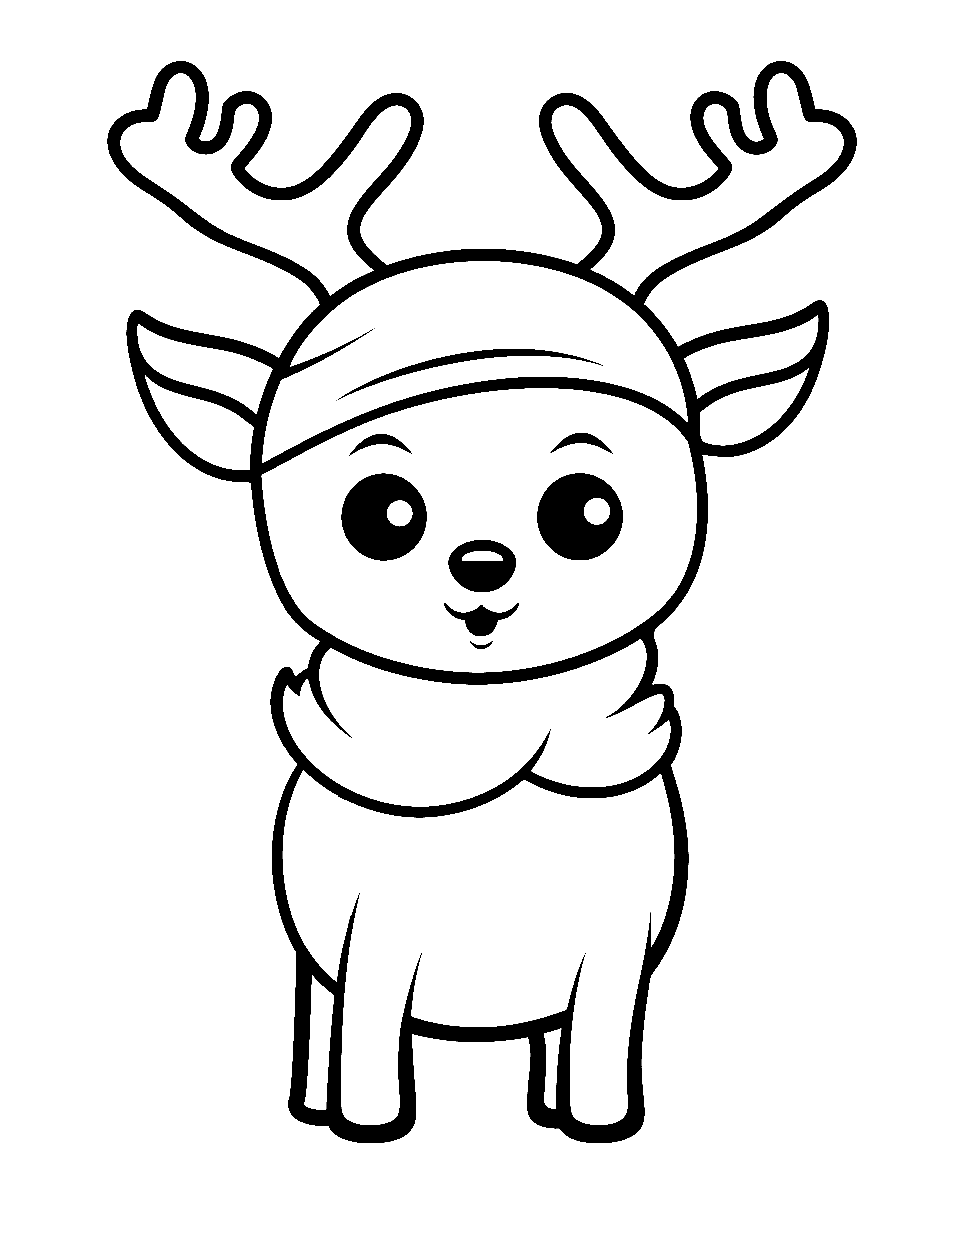 Kawaii Reindeer Coloring Page - Cute, stylized versions of a Kawaii reindeer with big, expressive eyes.